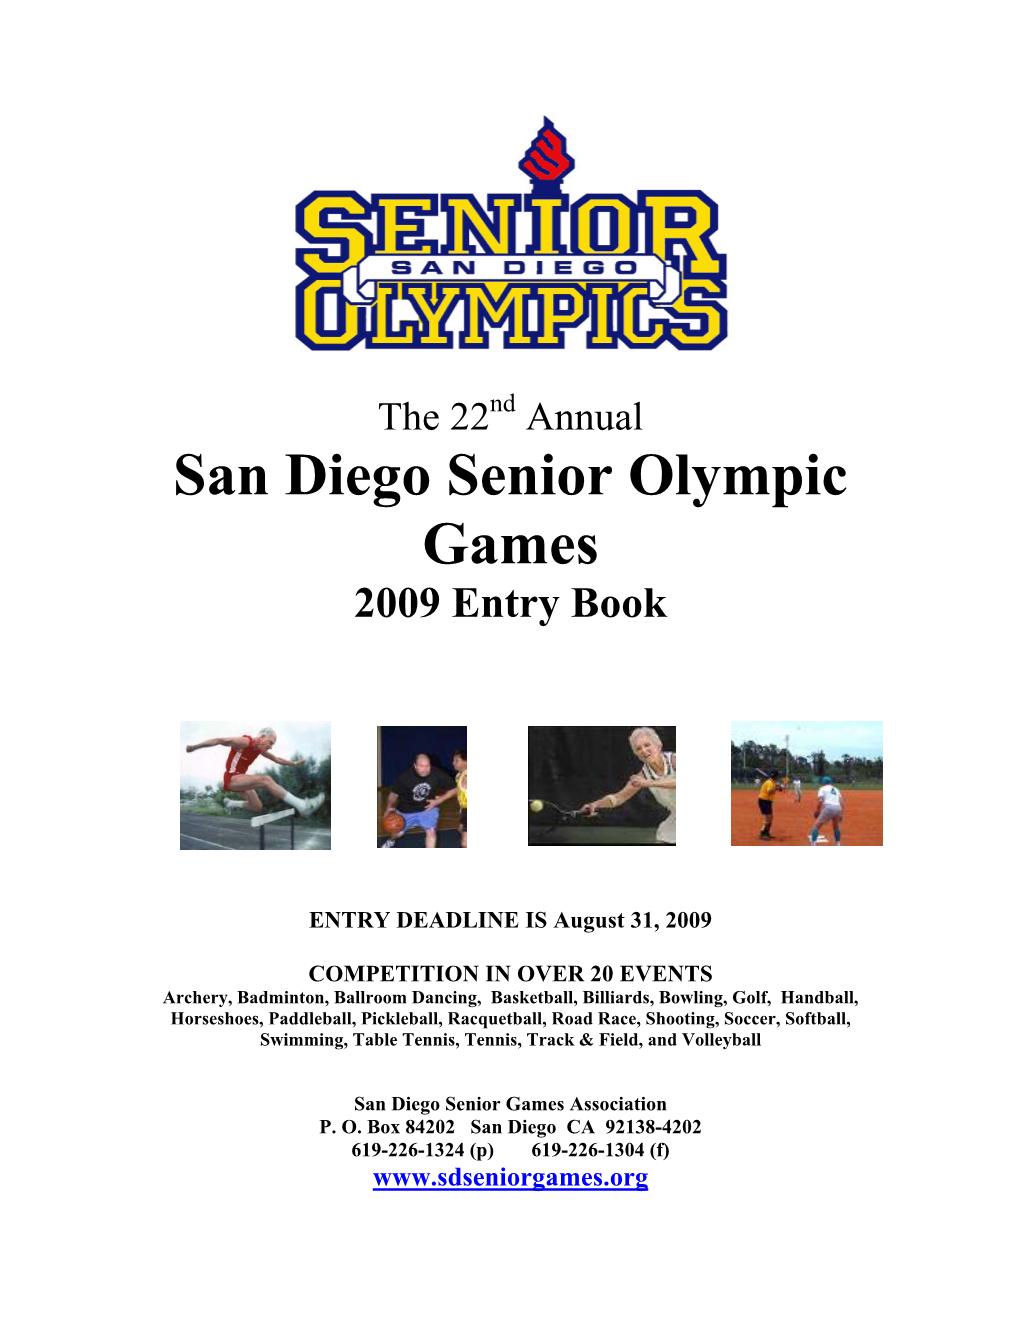 San Diego Senior Olympic Games 2009 Entry Book